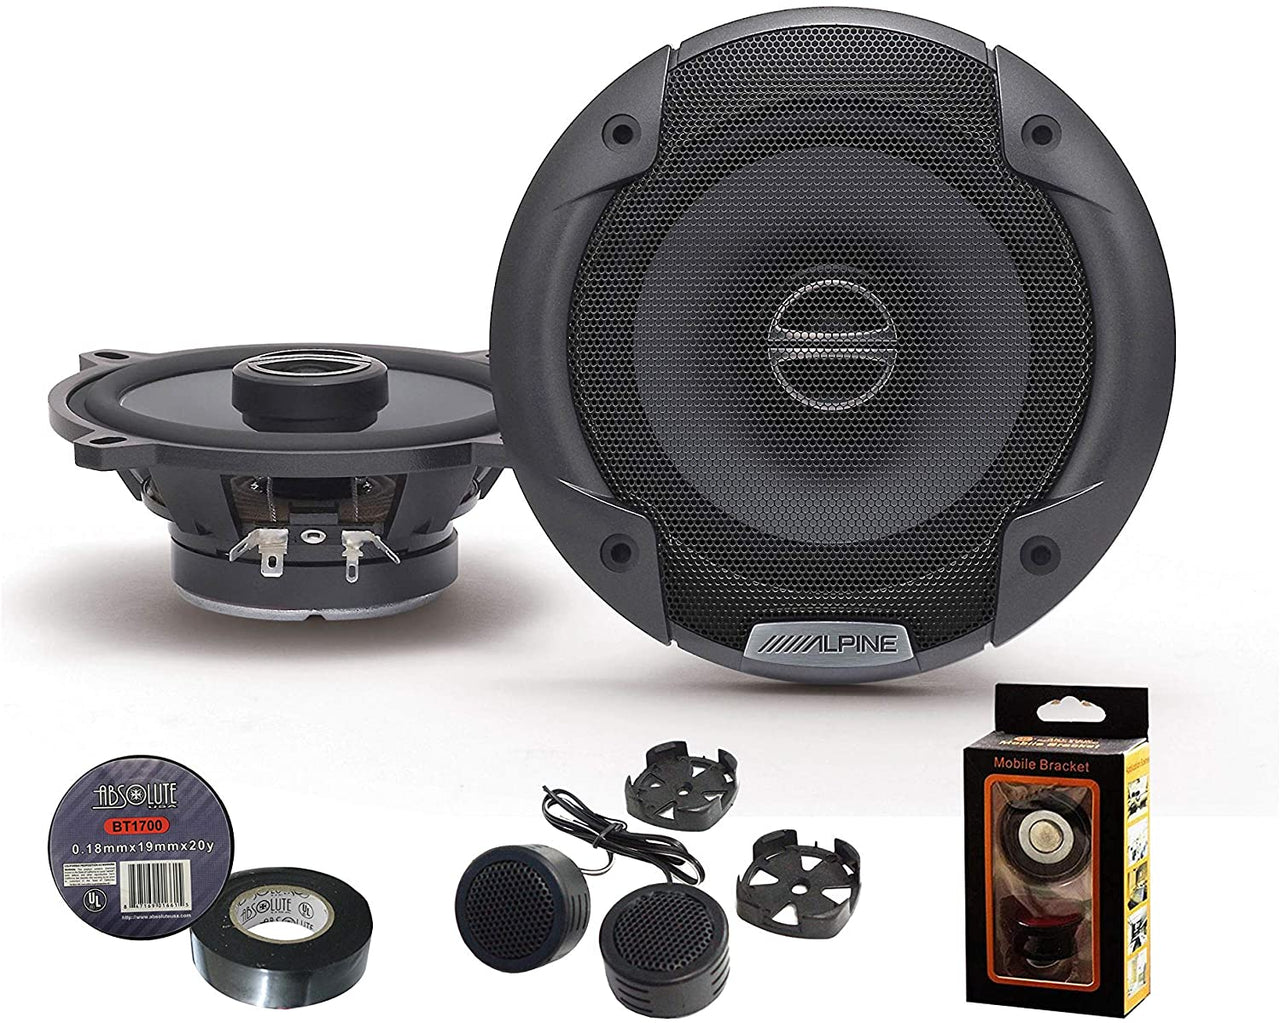 SPE-5000 Type-E Series 5-1/4" 2-Way car Speakers Bundle